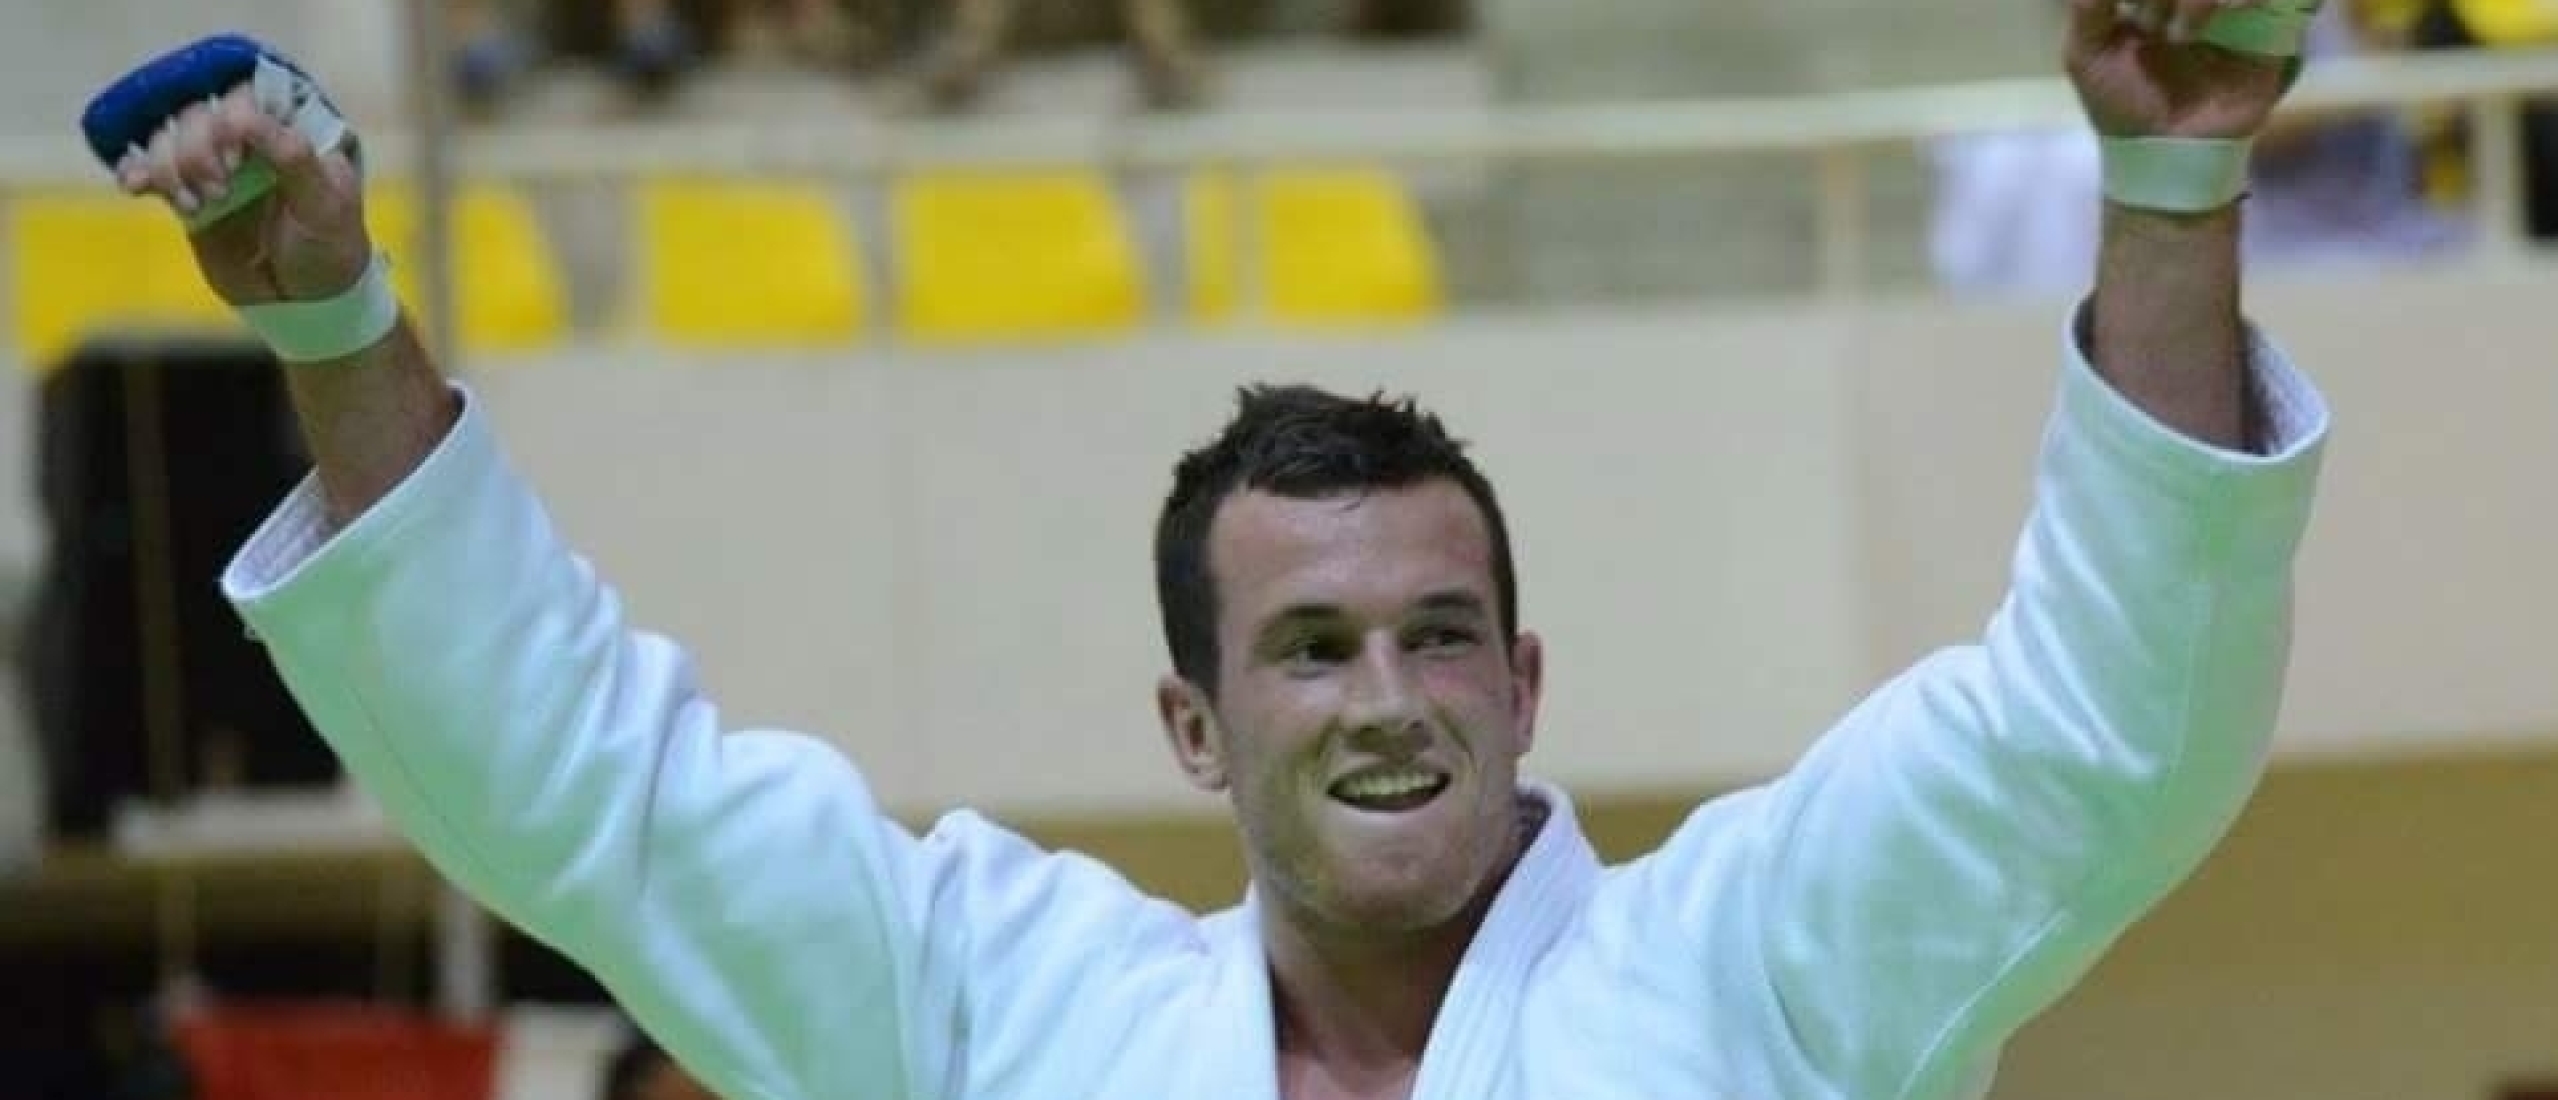 Melvin Schol Wereldkampioen Ju Jitsu